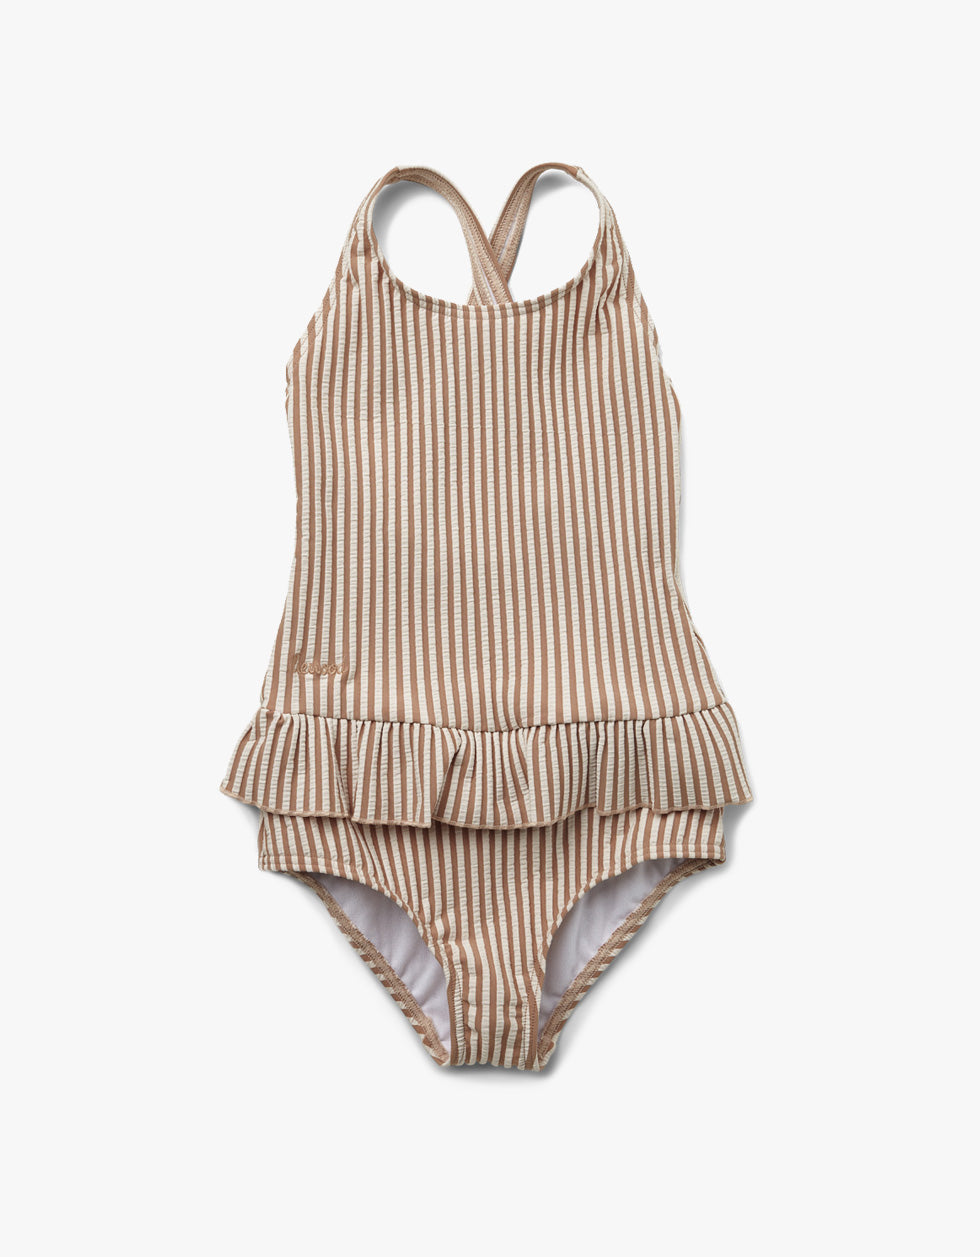 Amara Swimsuit Seersucker - Y/D Stripe: Tuscany Rose/Sandy